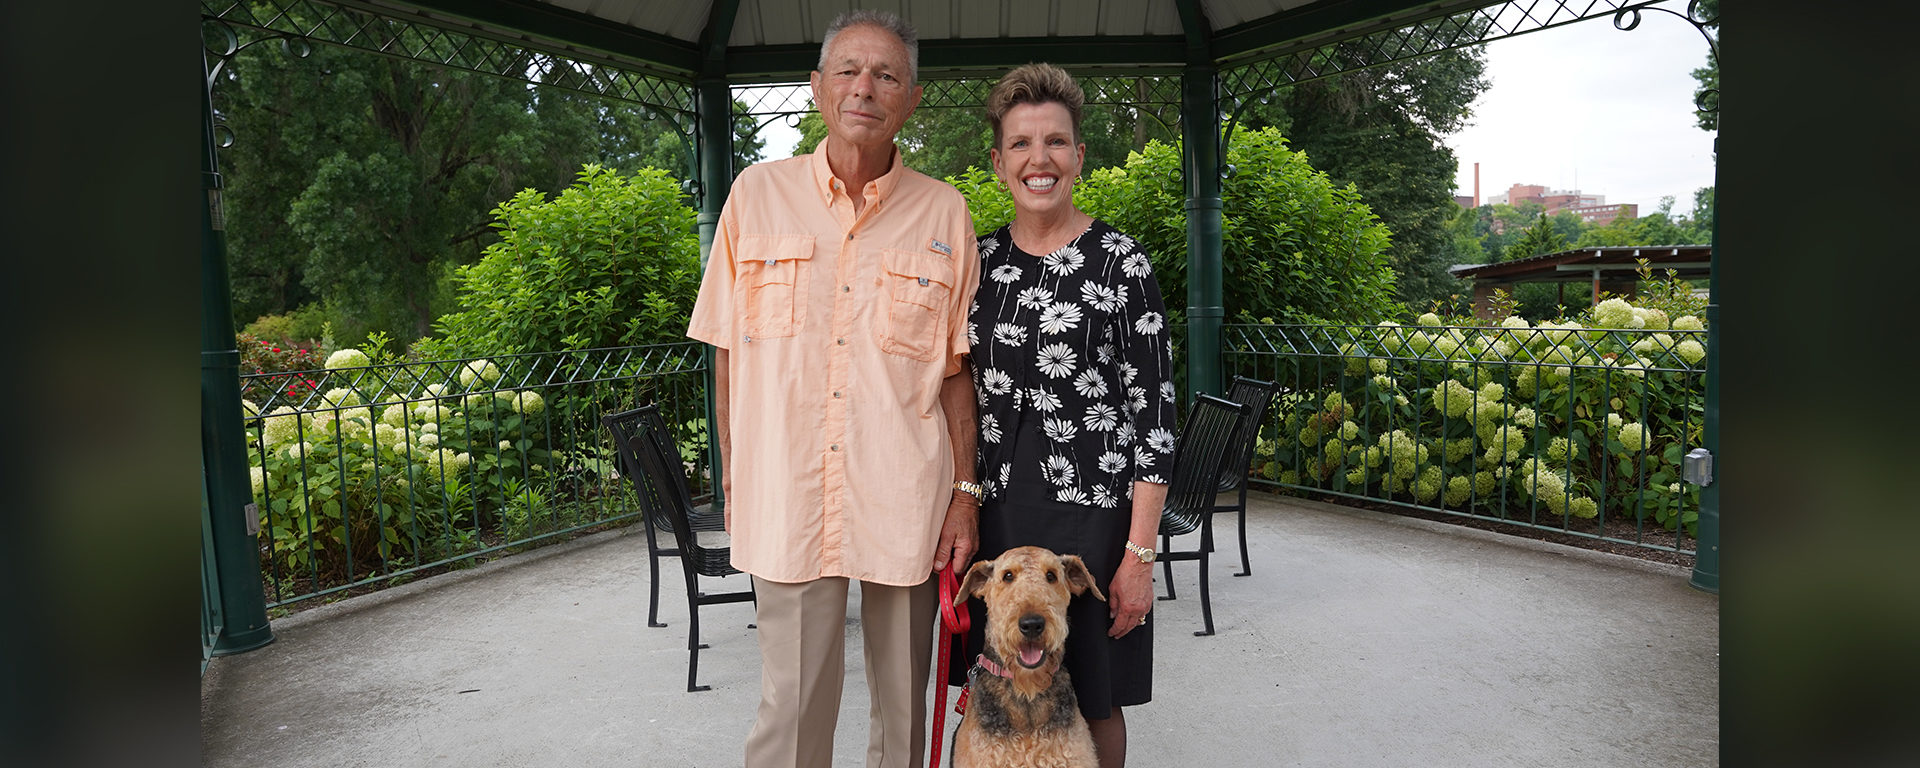 Interim UTS Chancellor Linda Martin and her husband, Ken Huff, and their dog, Jake.